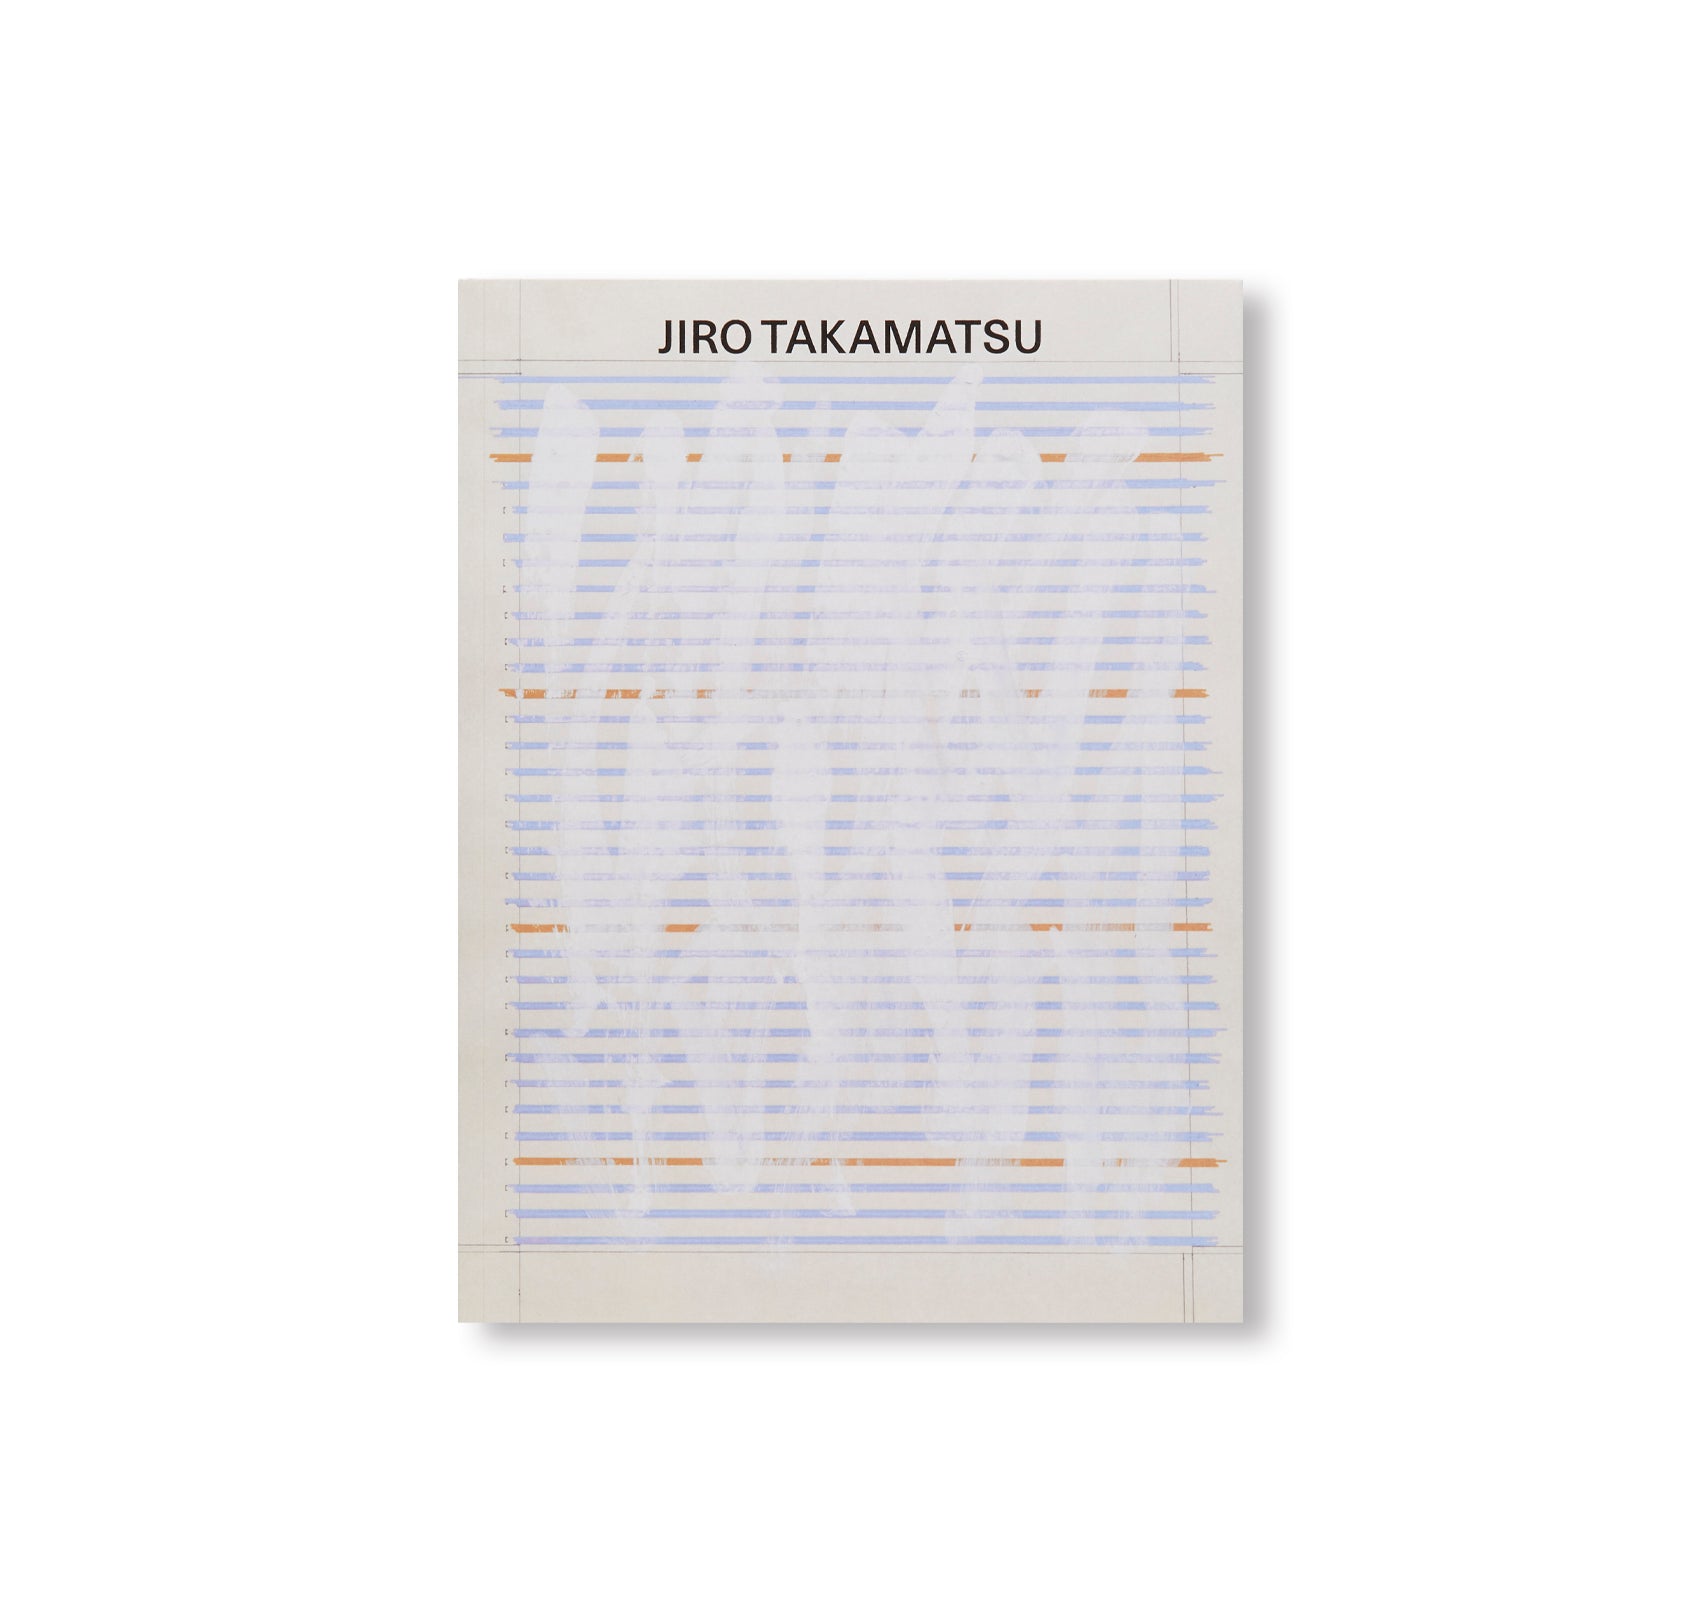 JIRO TAKAMATSU by Jiro Takamatsu